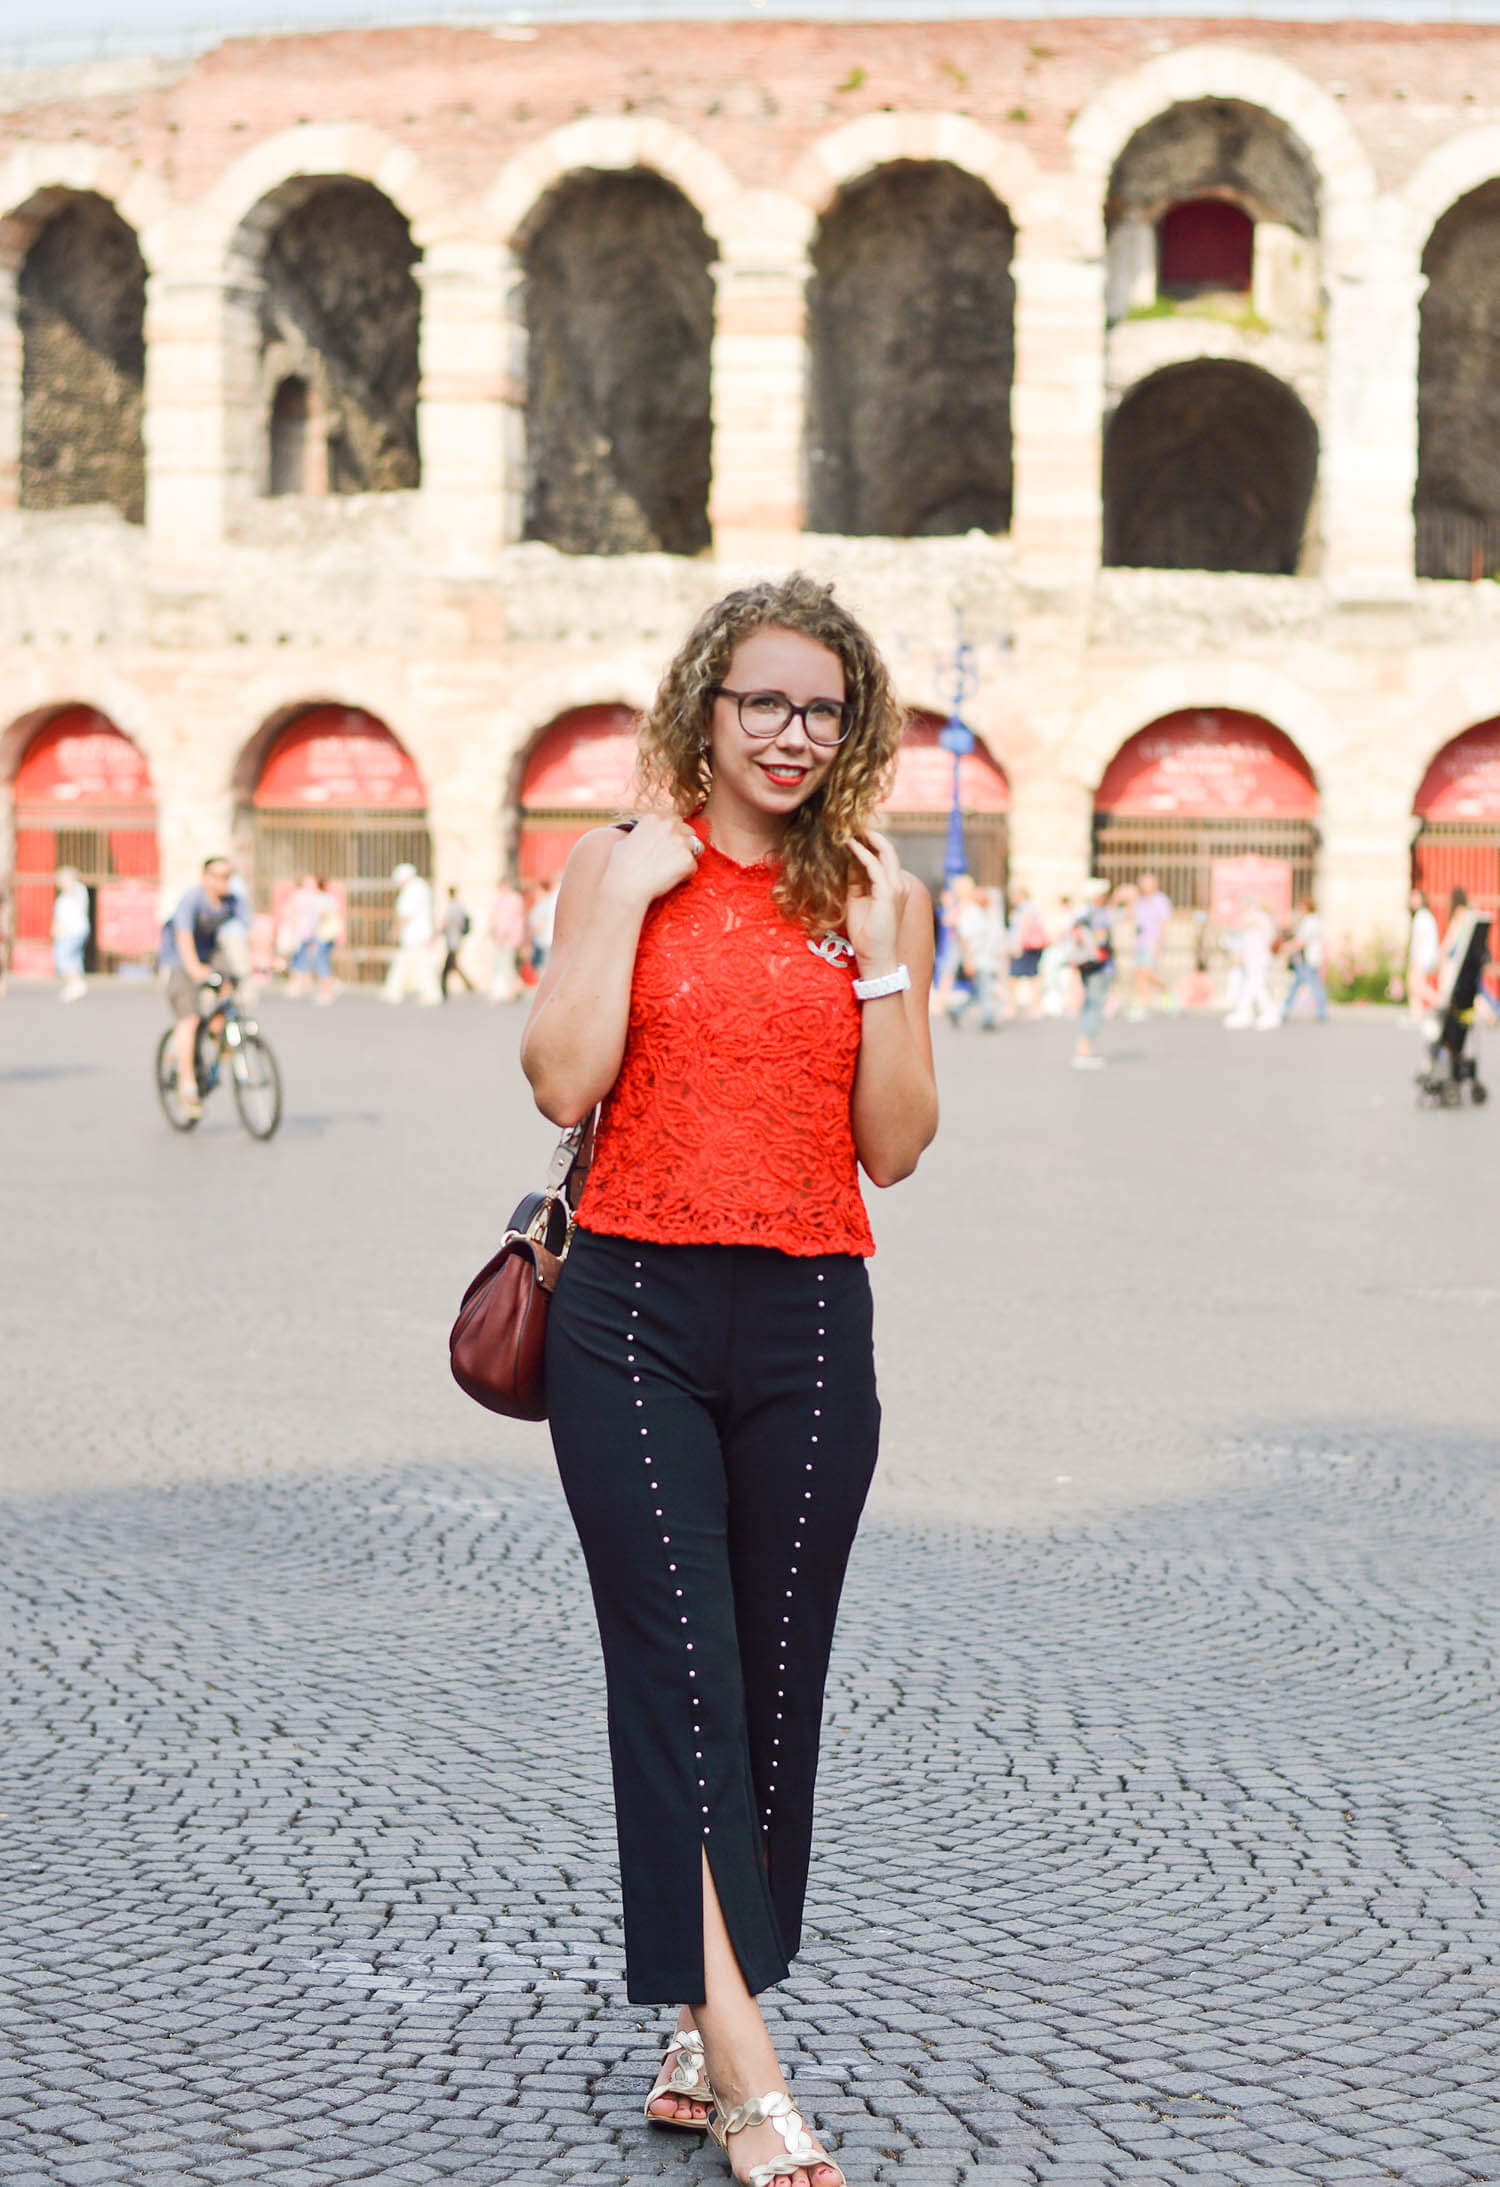 kationette-fashionblog-travelblog-Zara-Outfit-Lace-Top-Pearl-Pants-Verona-Italy